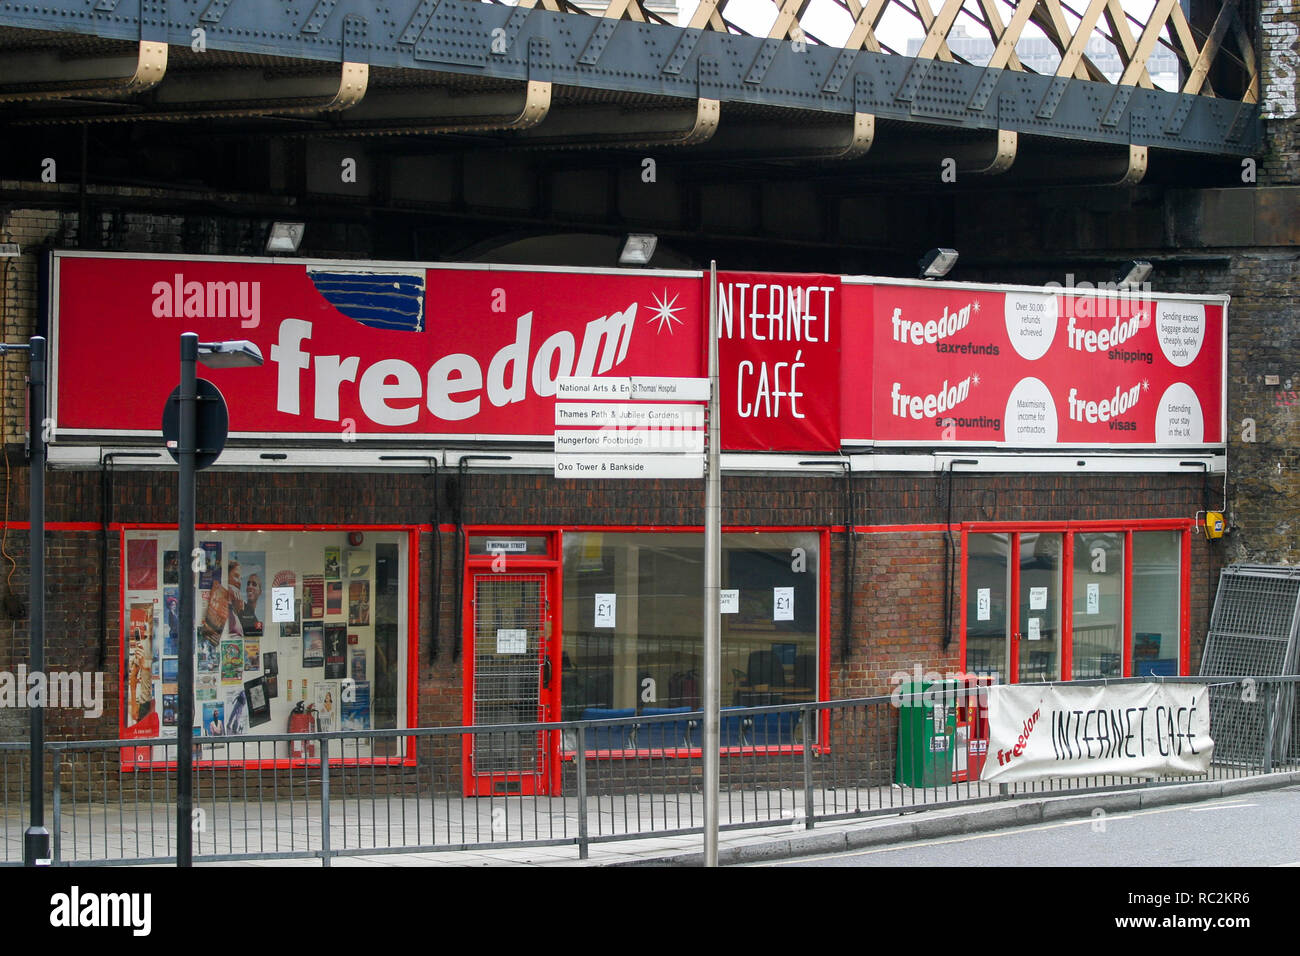 Internet café 'Freedom', London, Great-Britain, UK Stock Photo